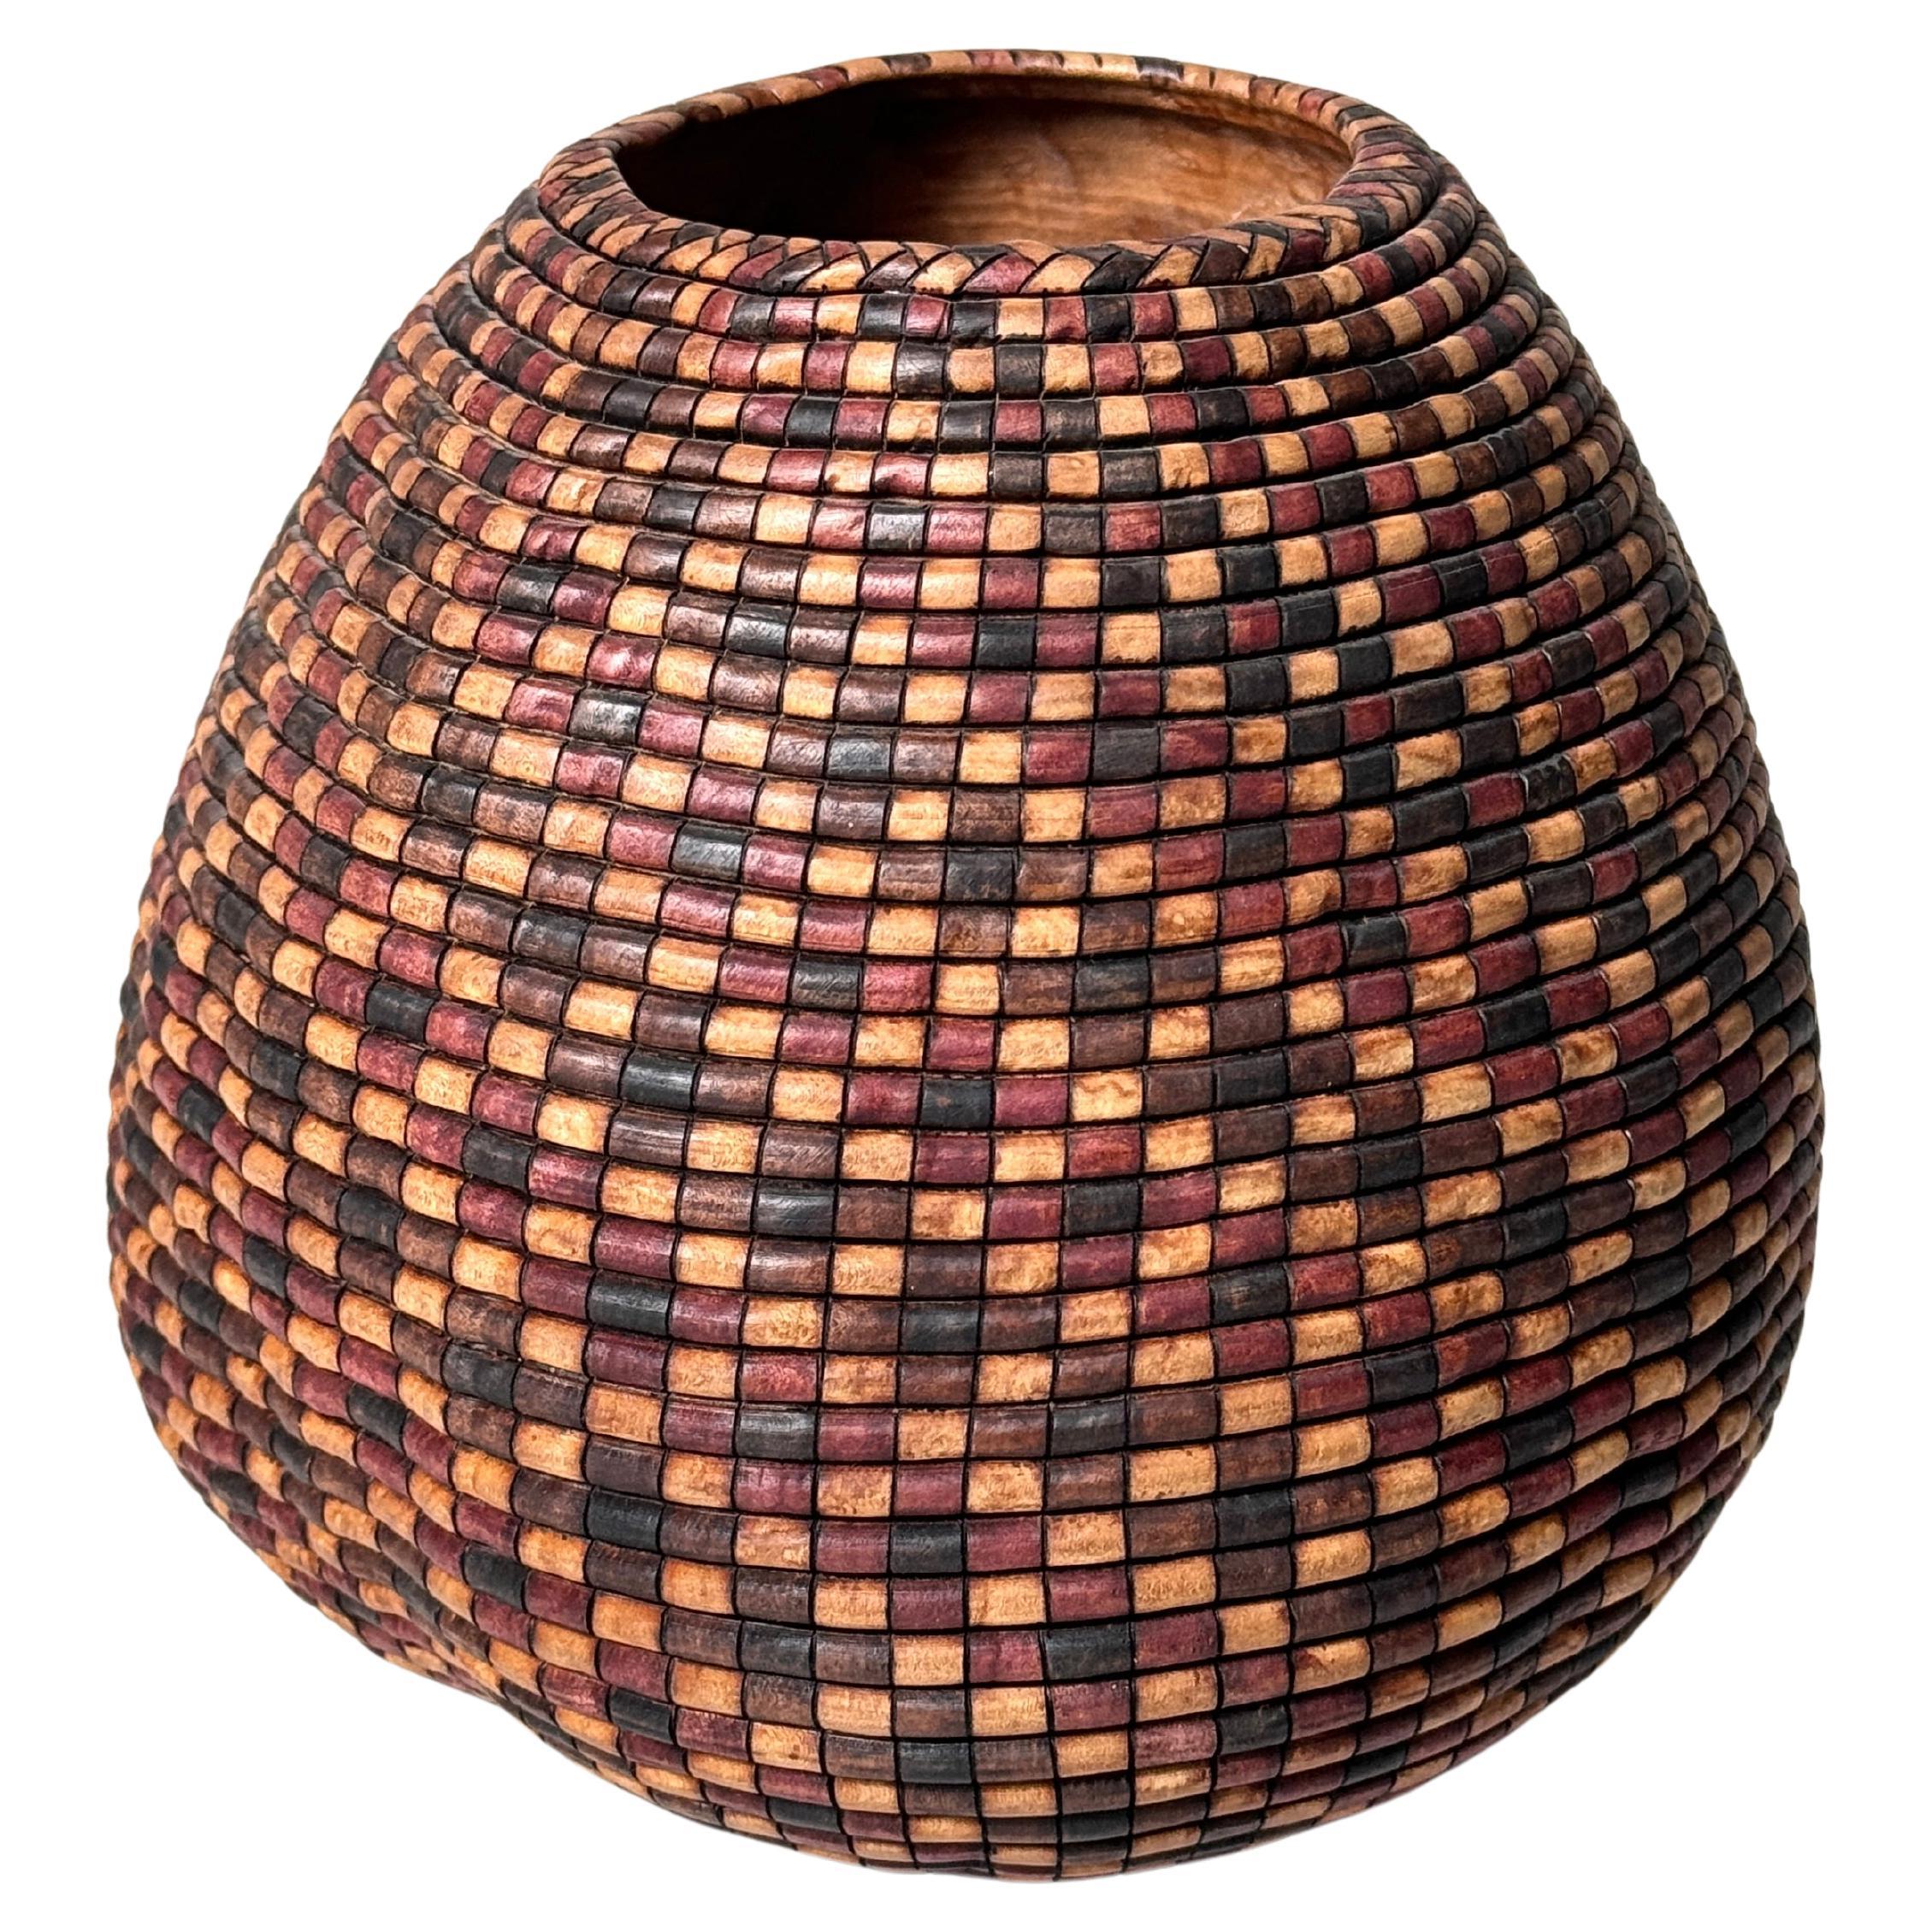 American Studio Turned Wood Basket Illusion Vessel Bowl by David Nittmann 1990s